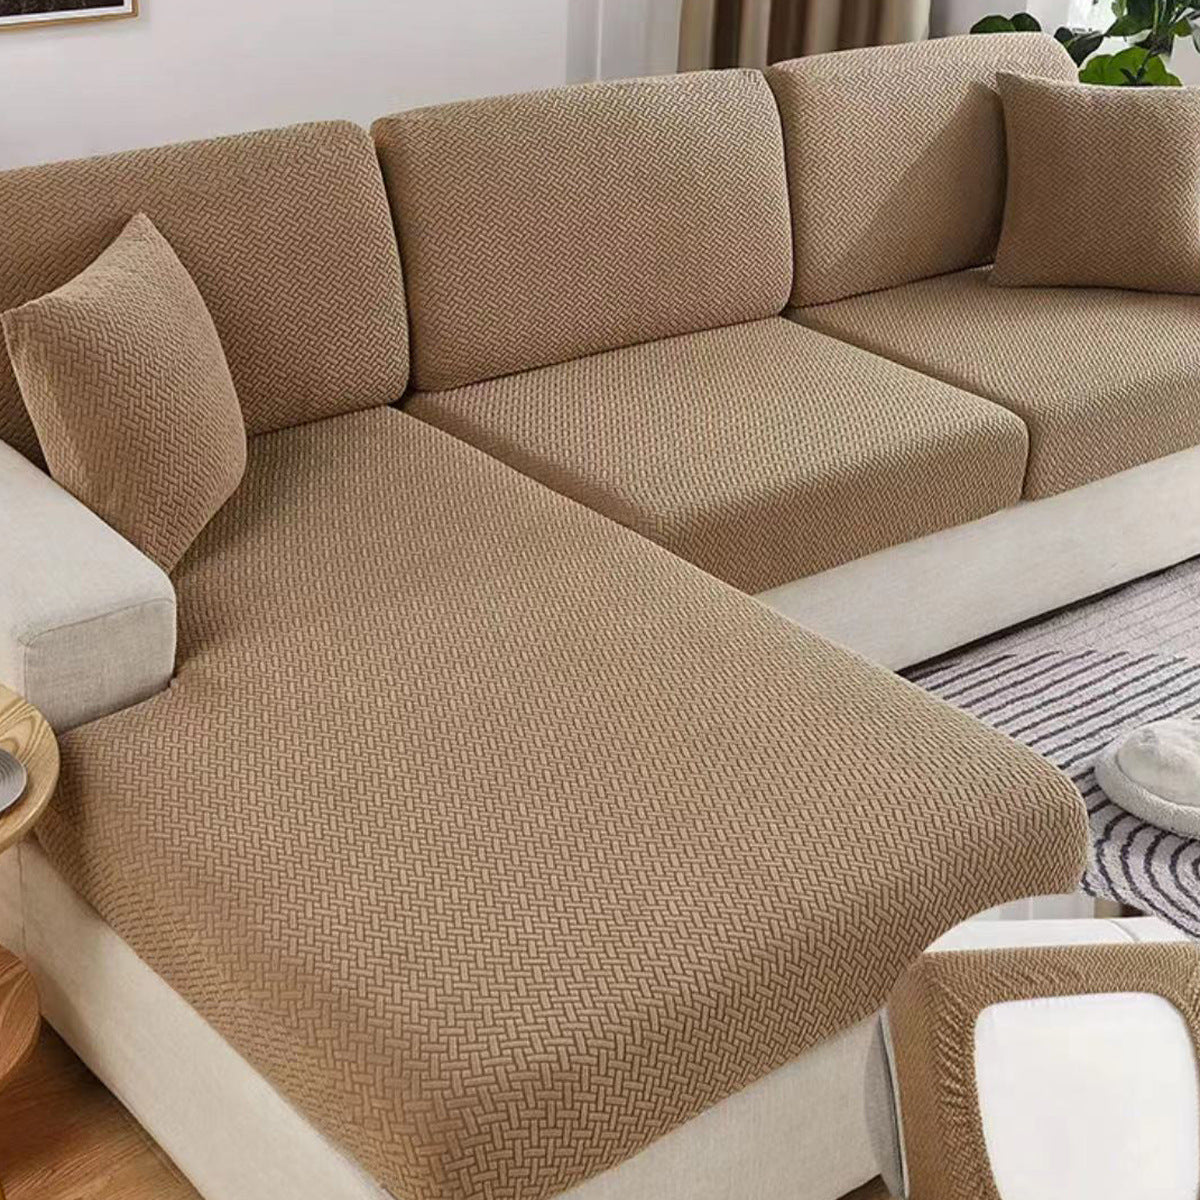 Pet-Friendly Sofa Covers